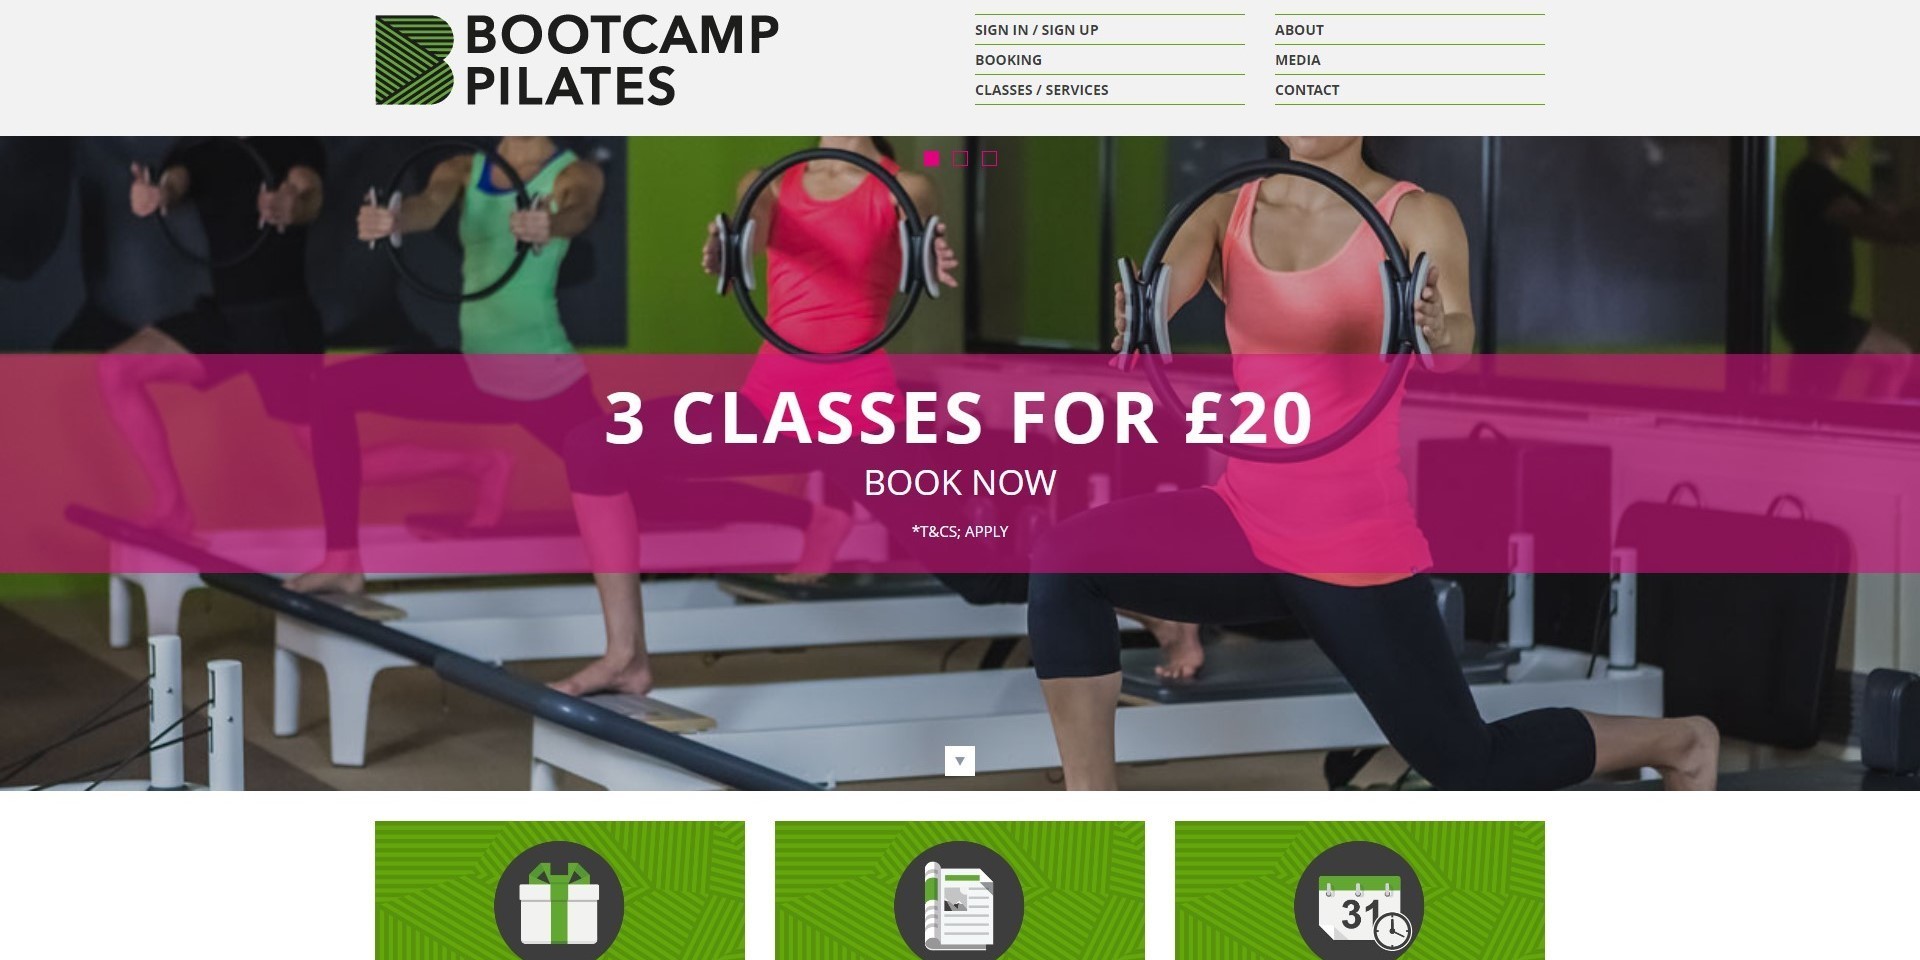 The previous Bootcamp Pilates website, shown on desktop